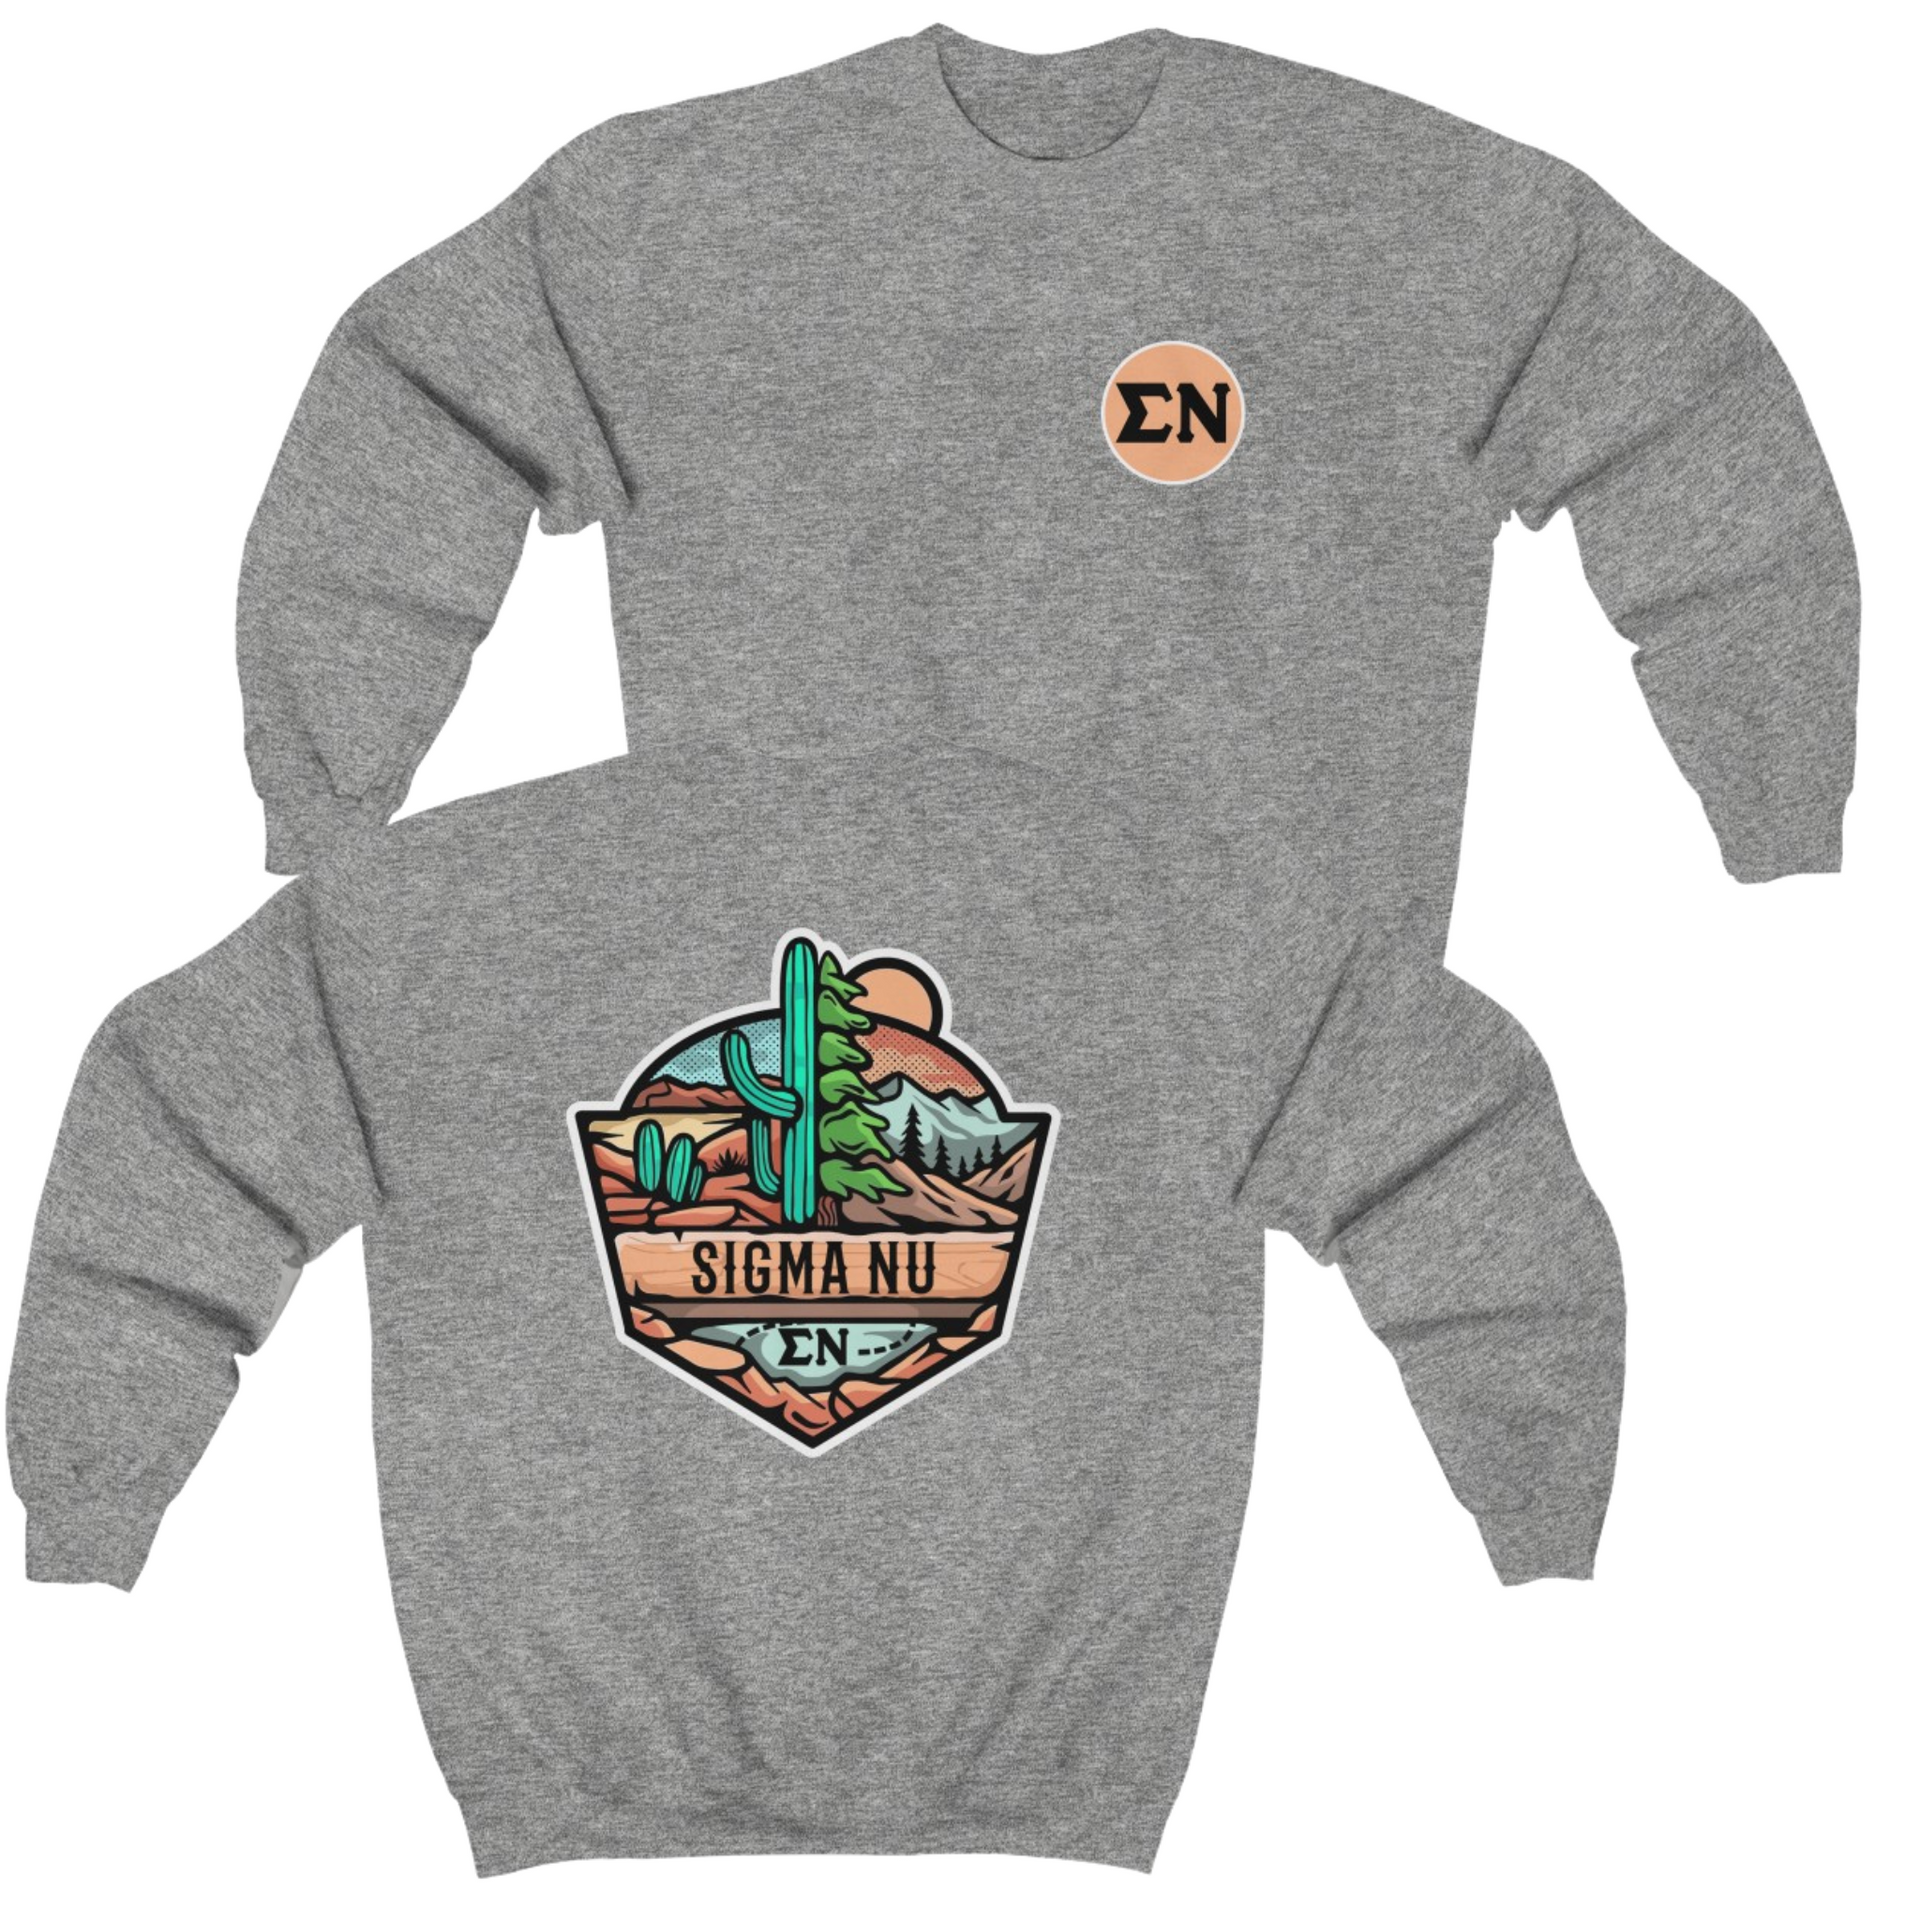 Grey Sigma Nu Graphic Crewneck Sweatshirt | Desert Mountains | Sigma Nu Clothing, Apparel and Merchandise